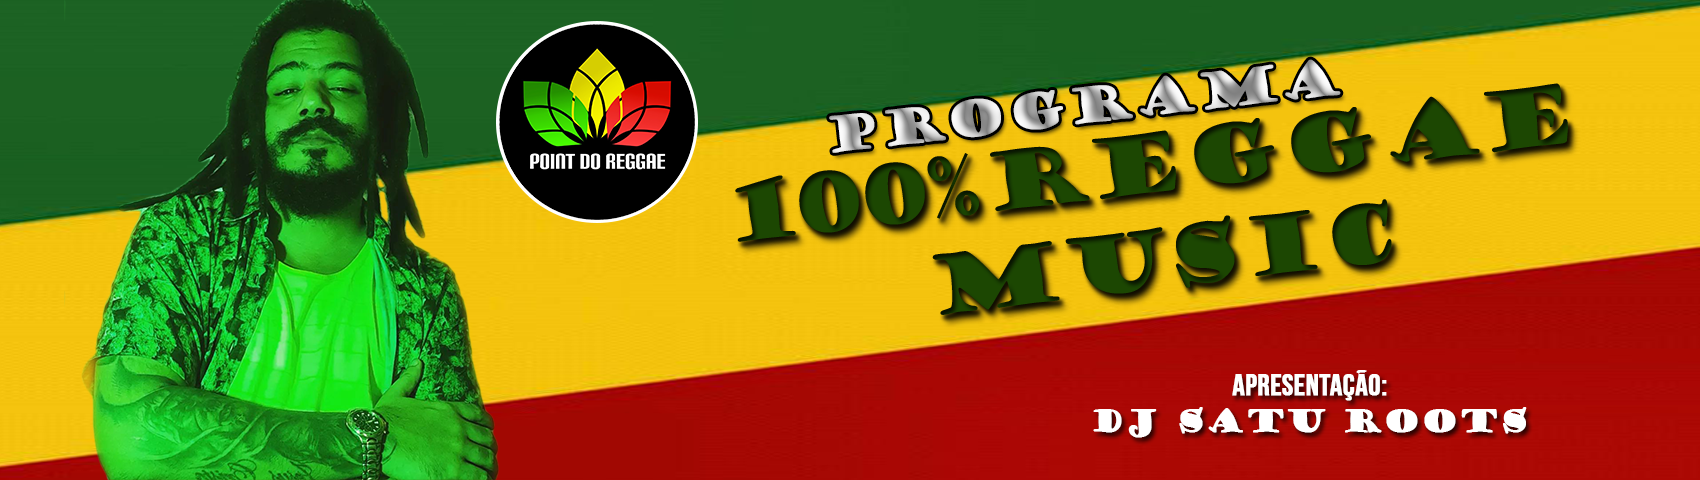 Programa 100% Reggae Music